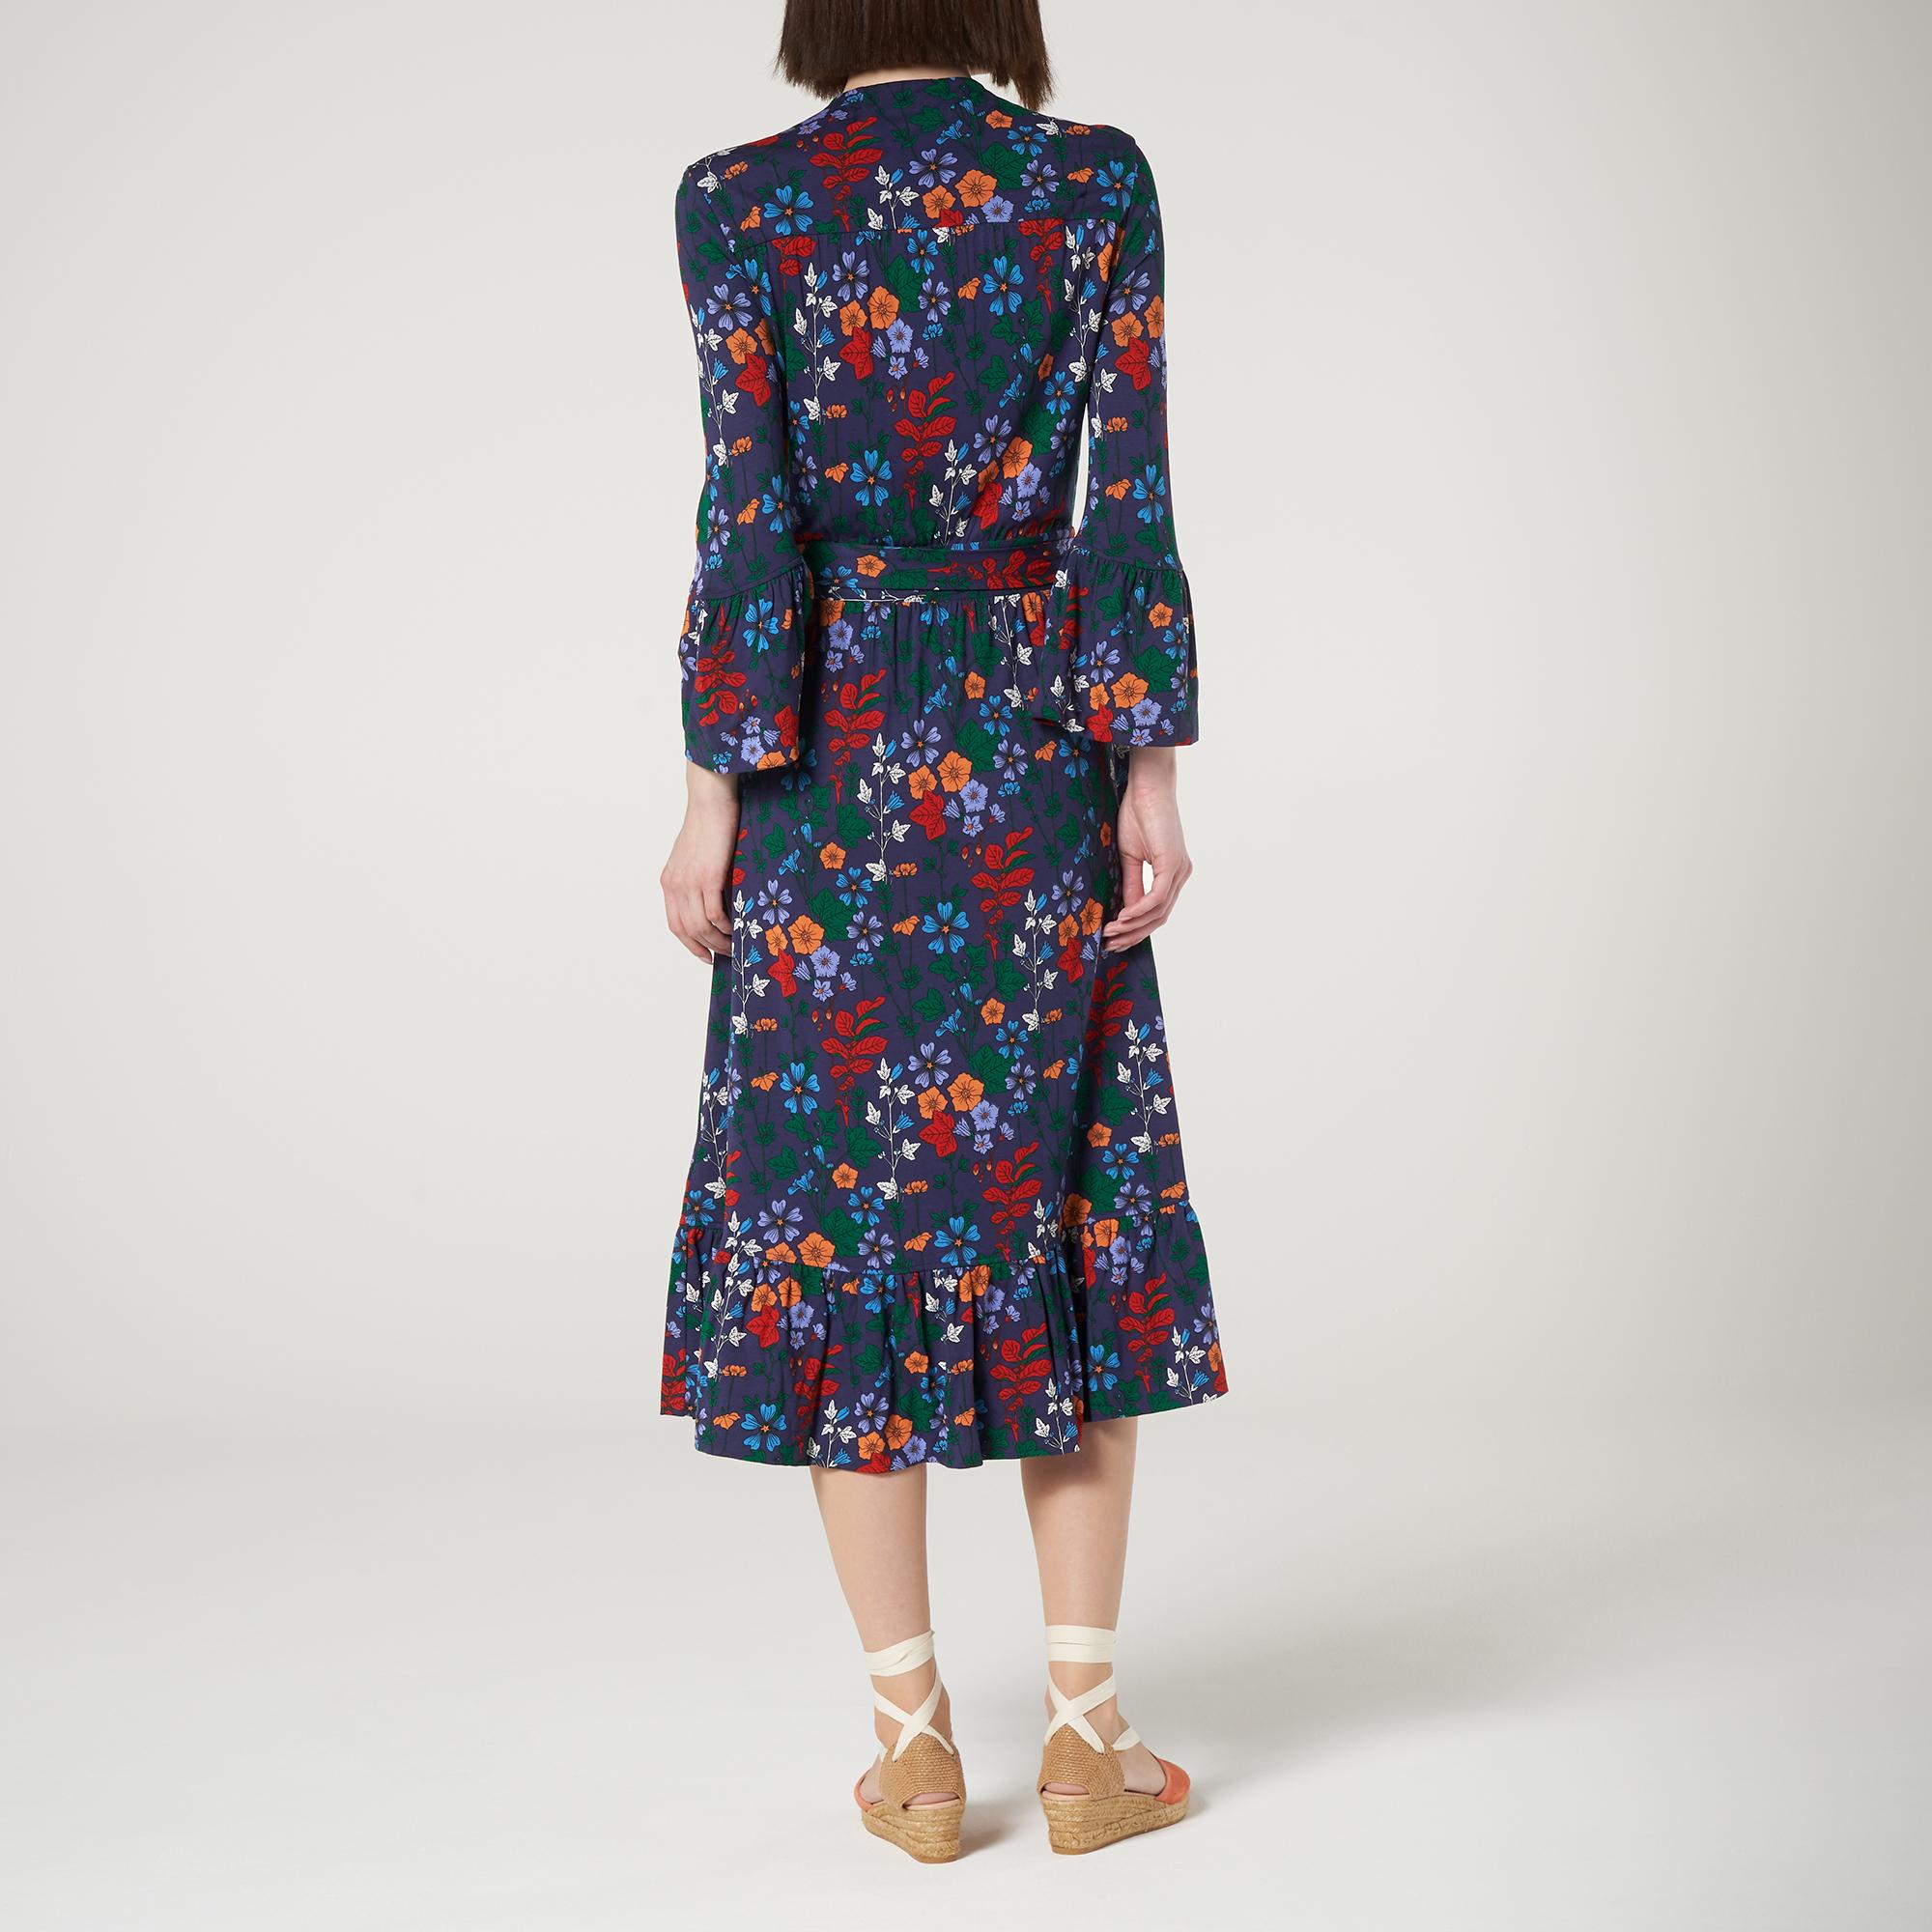 L.K.Bennett Vika Floral Print Wrap Dress | eBay